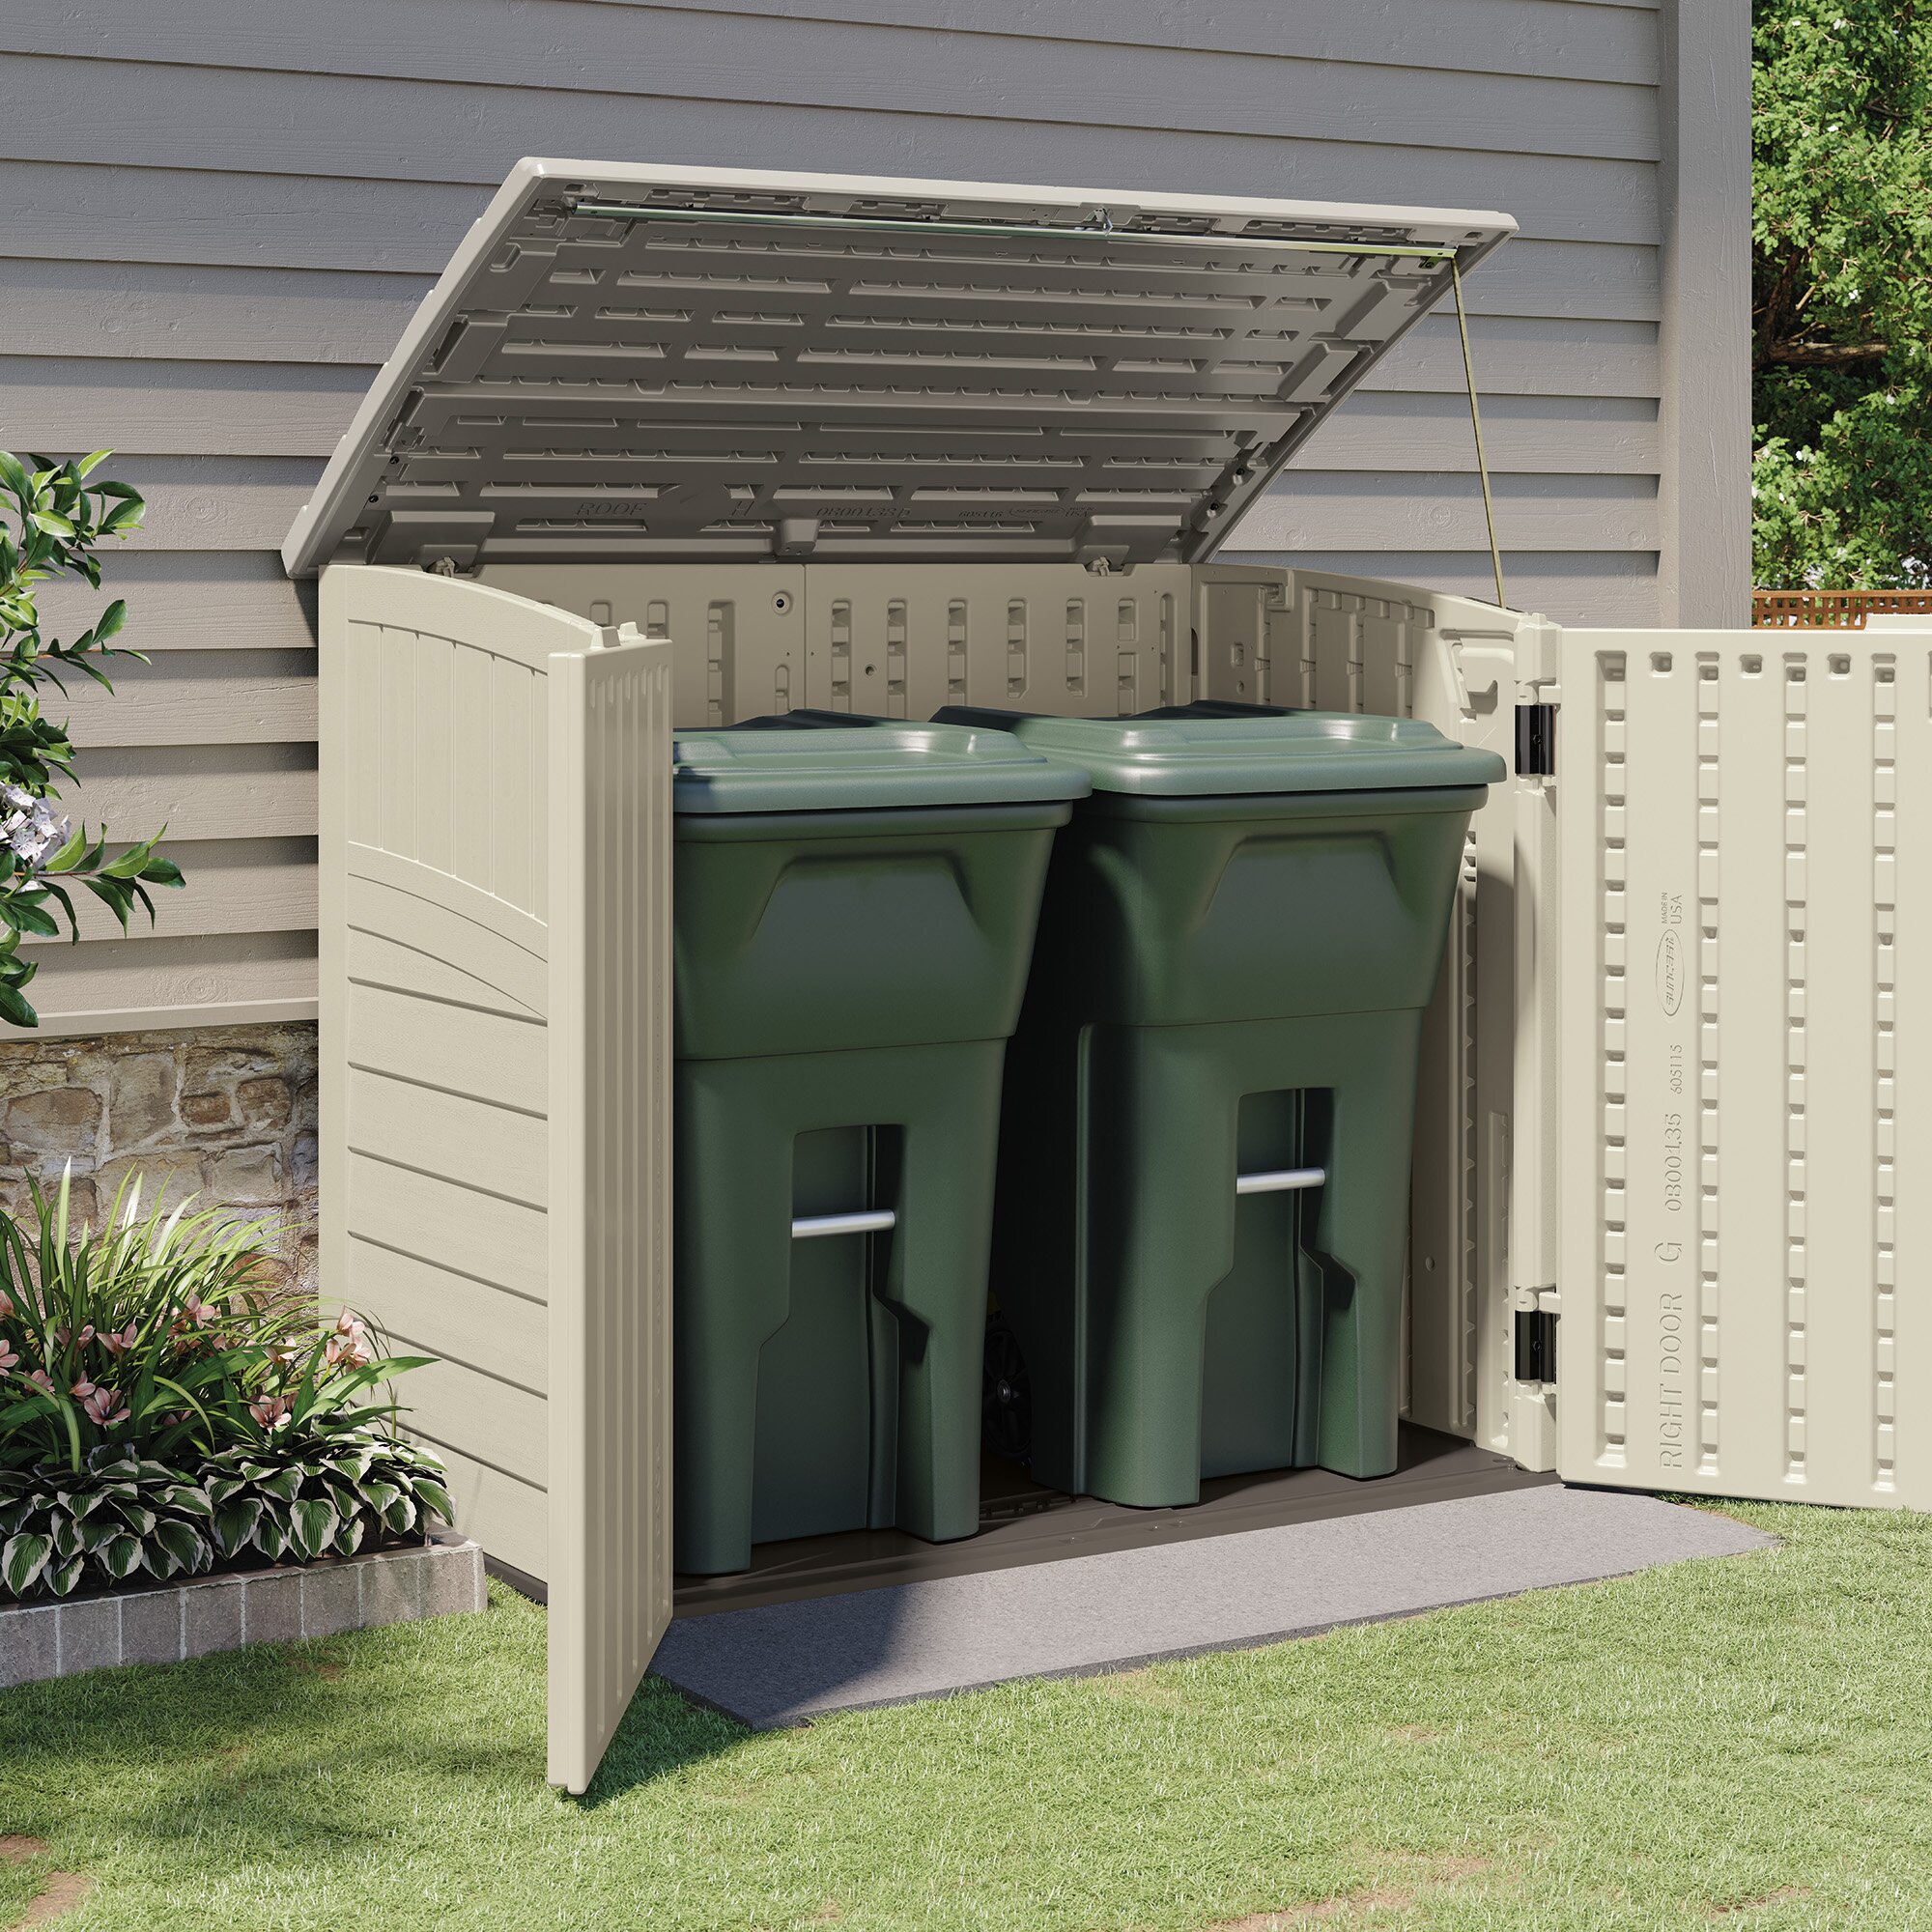 Backyard Deck Cabinet Garden Storage Shed Patio Outdoor Garage Tool Box New 